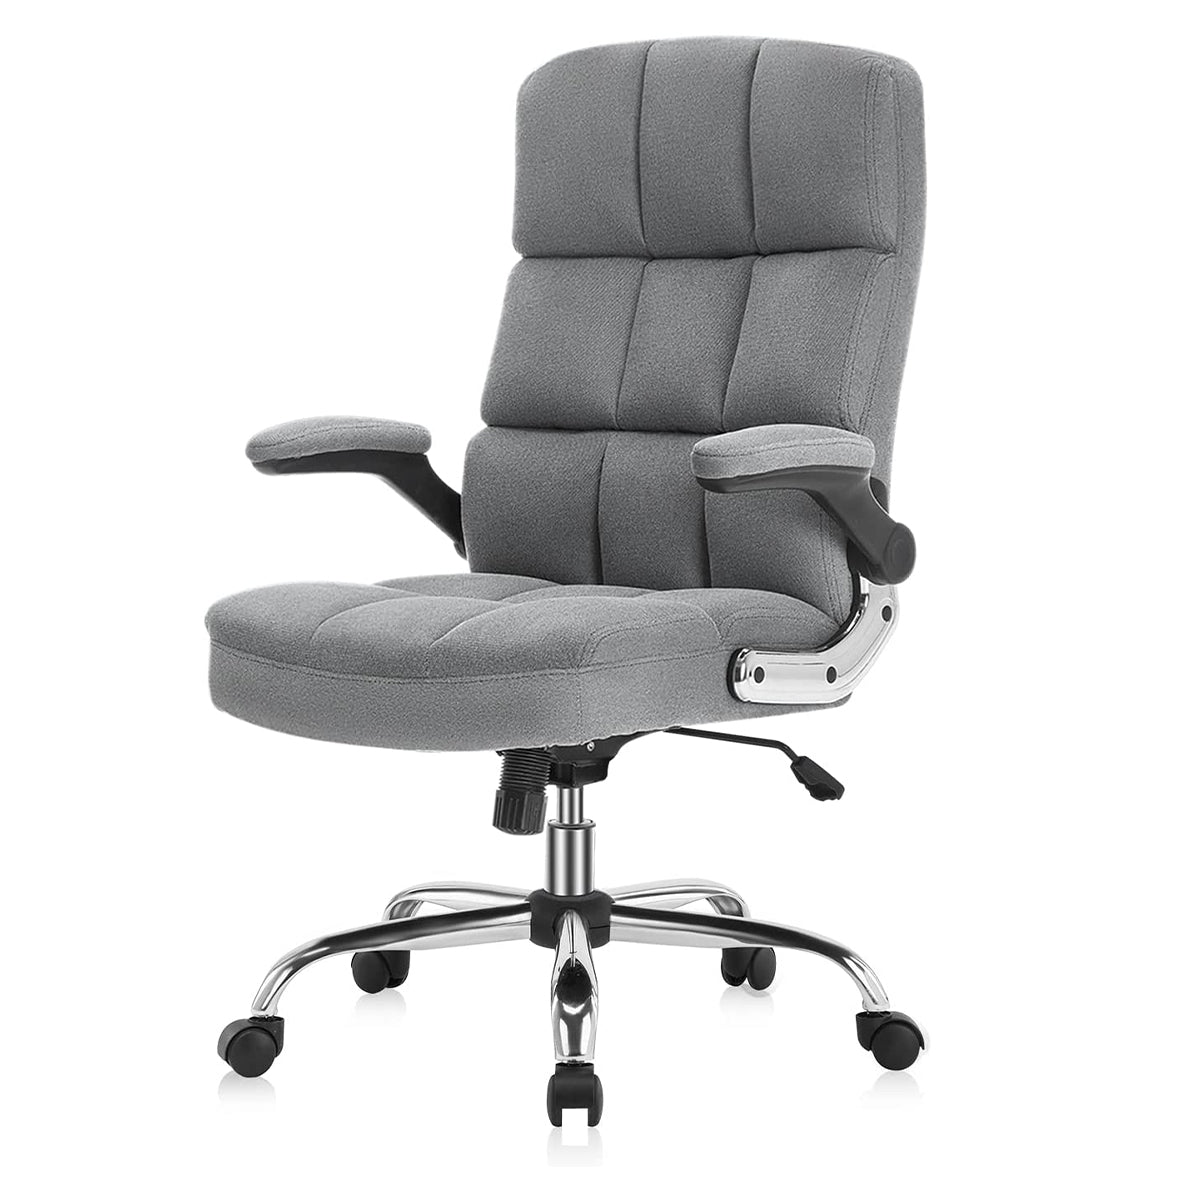 YAMASORO Velvet  Upholstered Fabric Office Computer Desk Chair Thick Padding for Comfort and Ergonomic Design for Lumbar Support